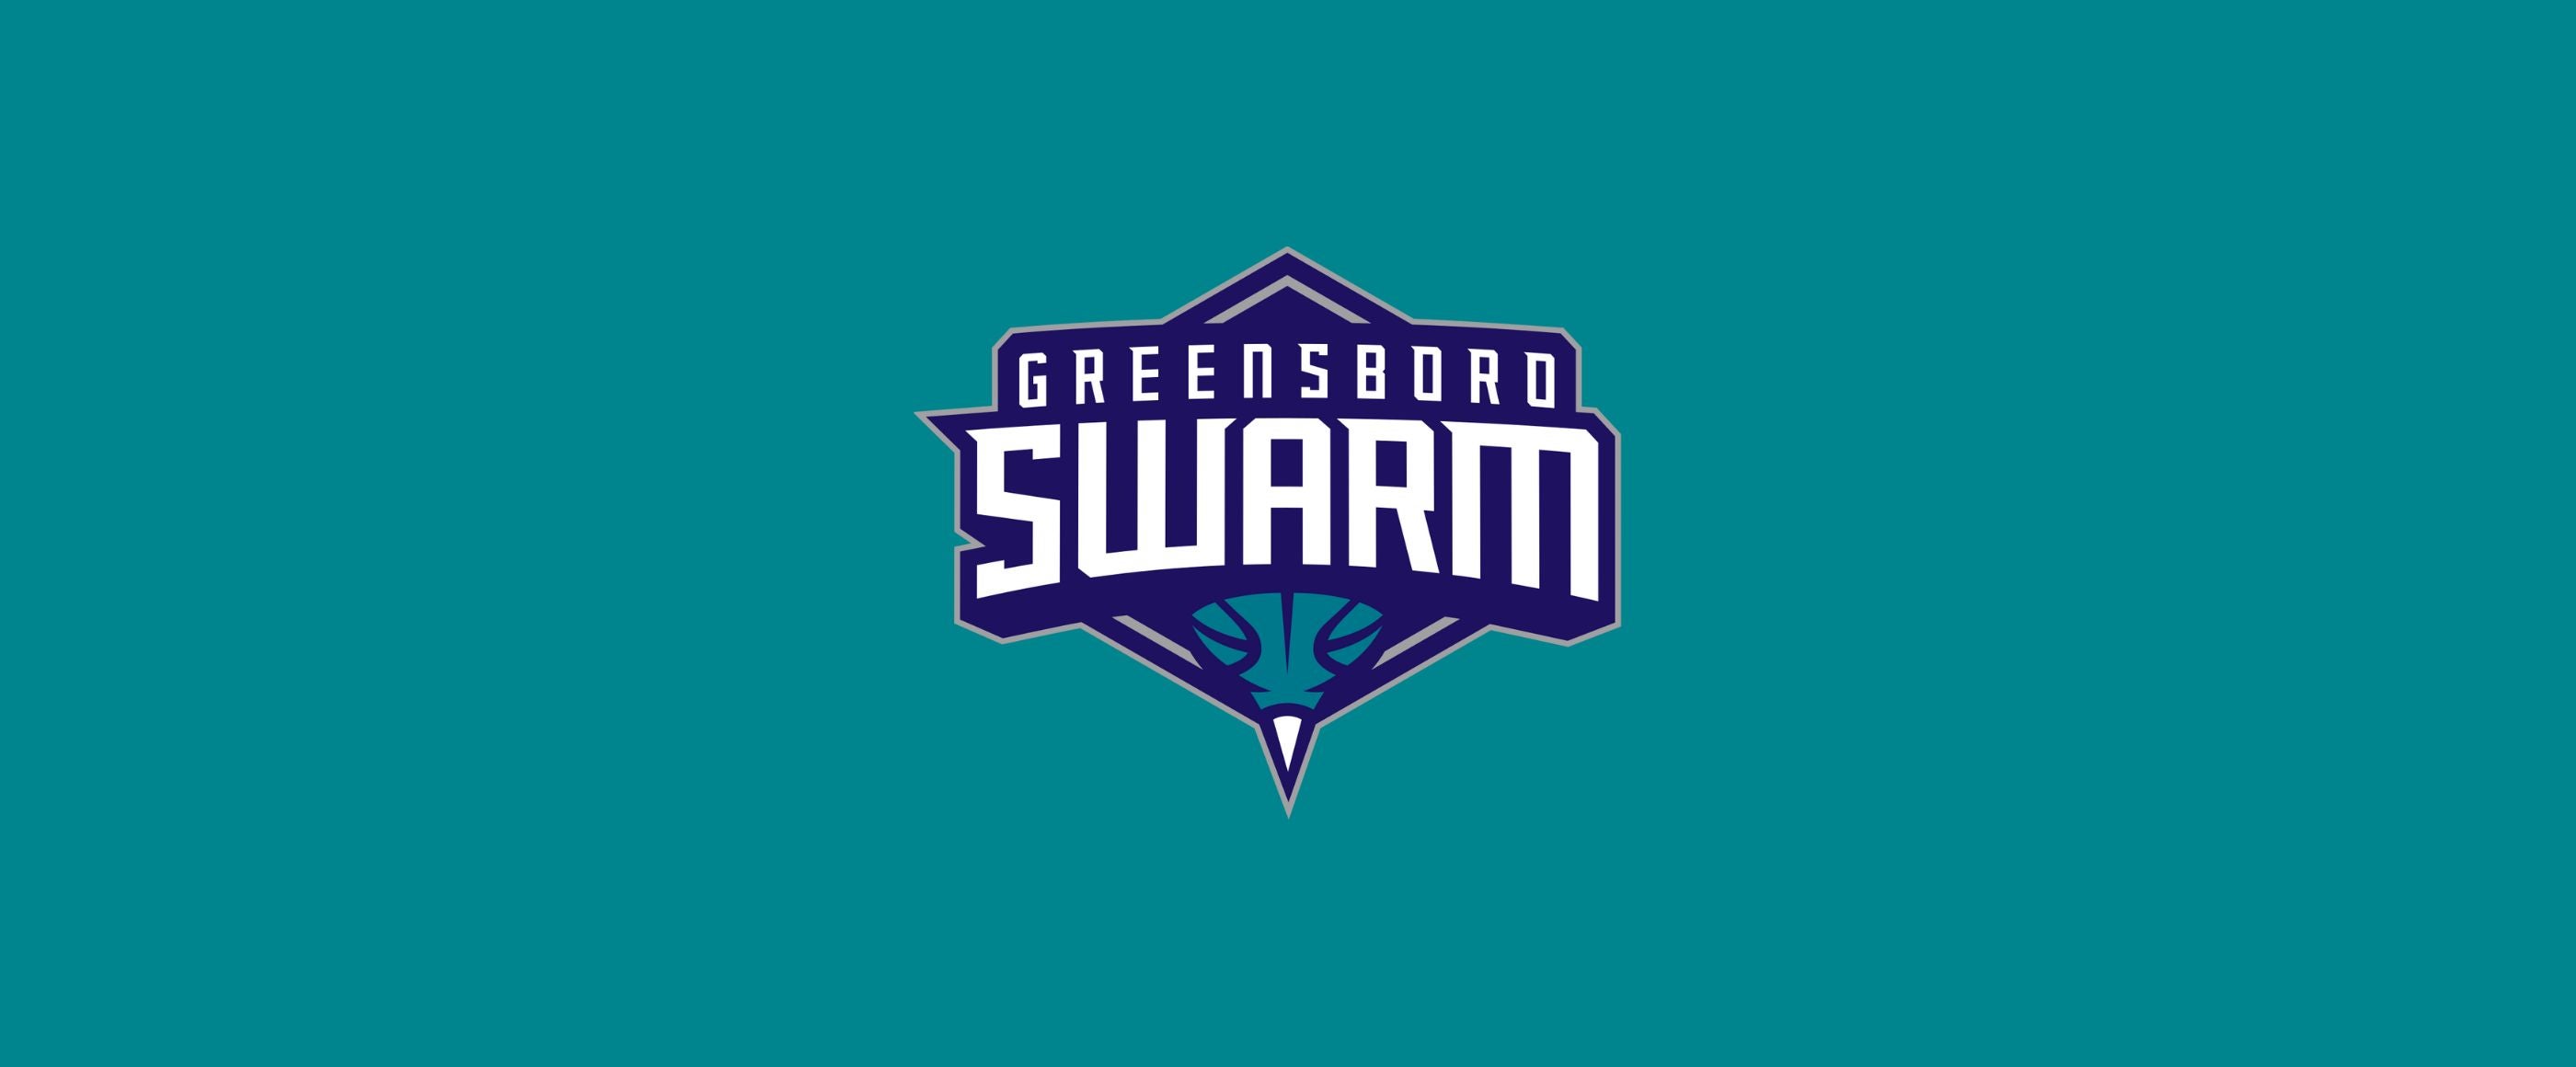 greensboro swarm mascot